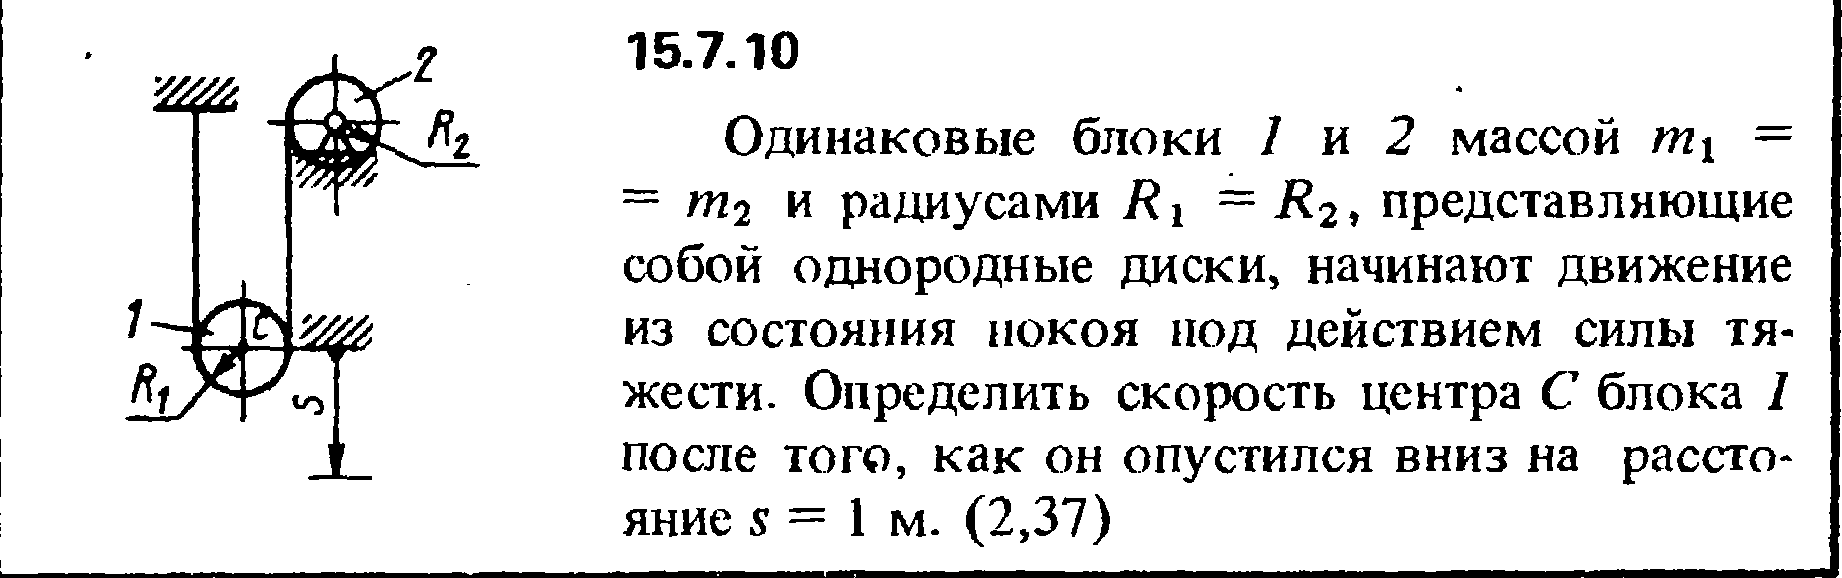 Решение задачи 15.7.10 из сборника Кепе О.Е. 1989 года